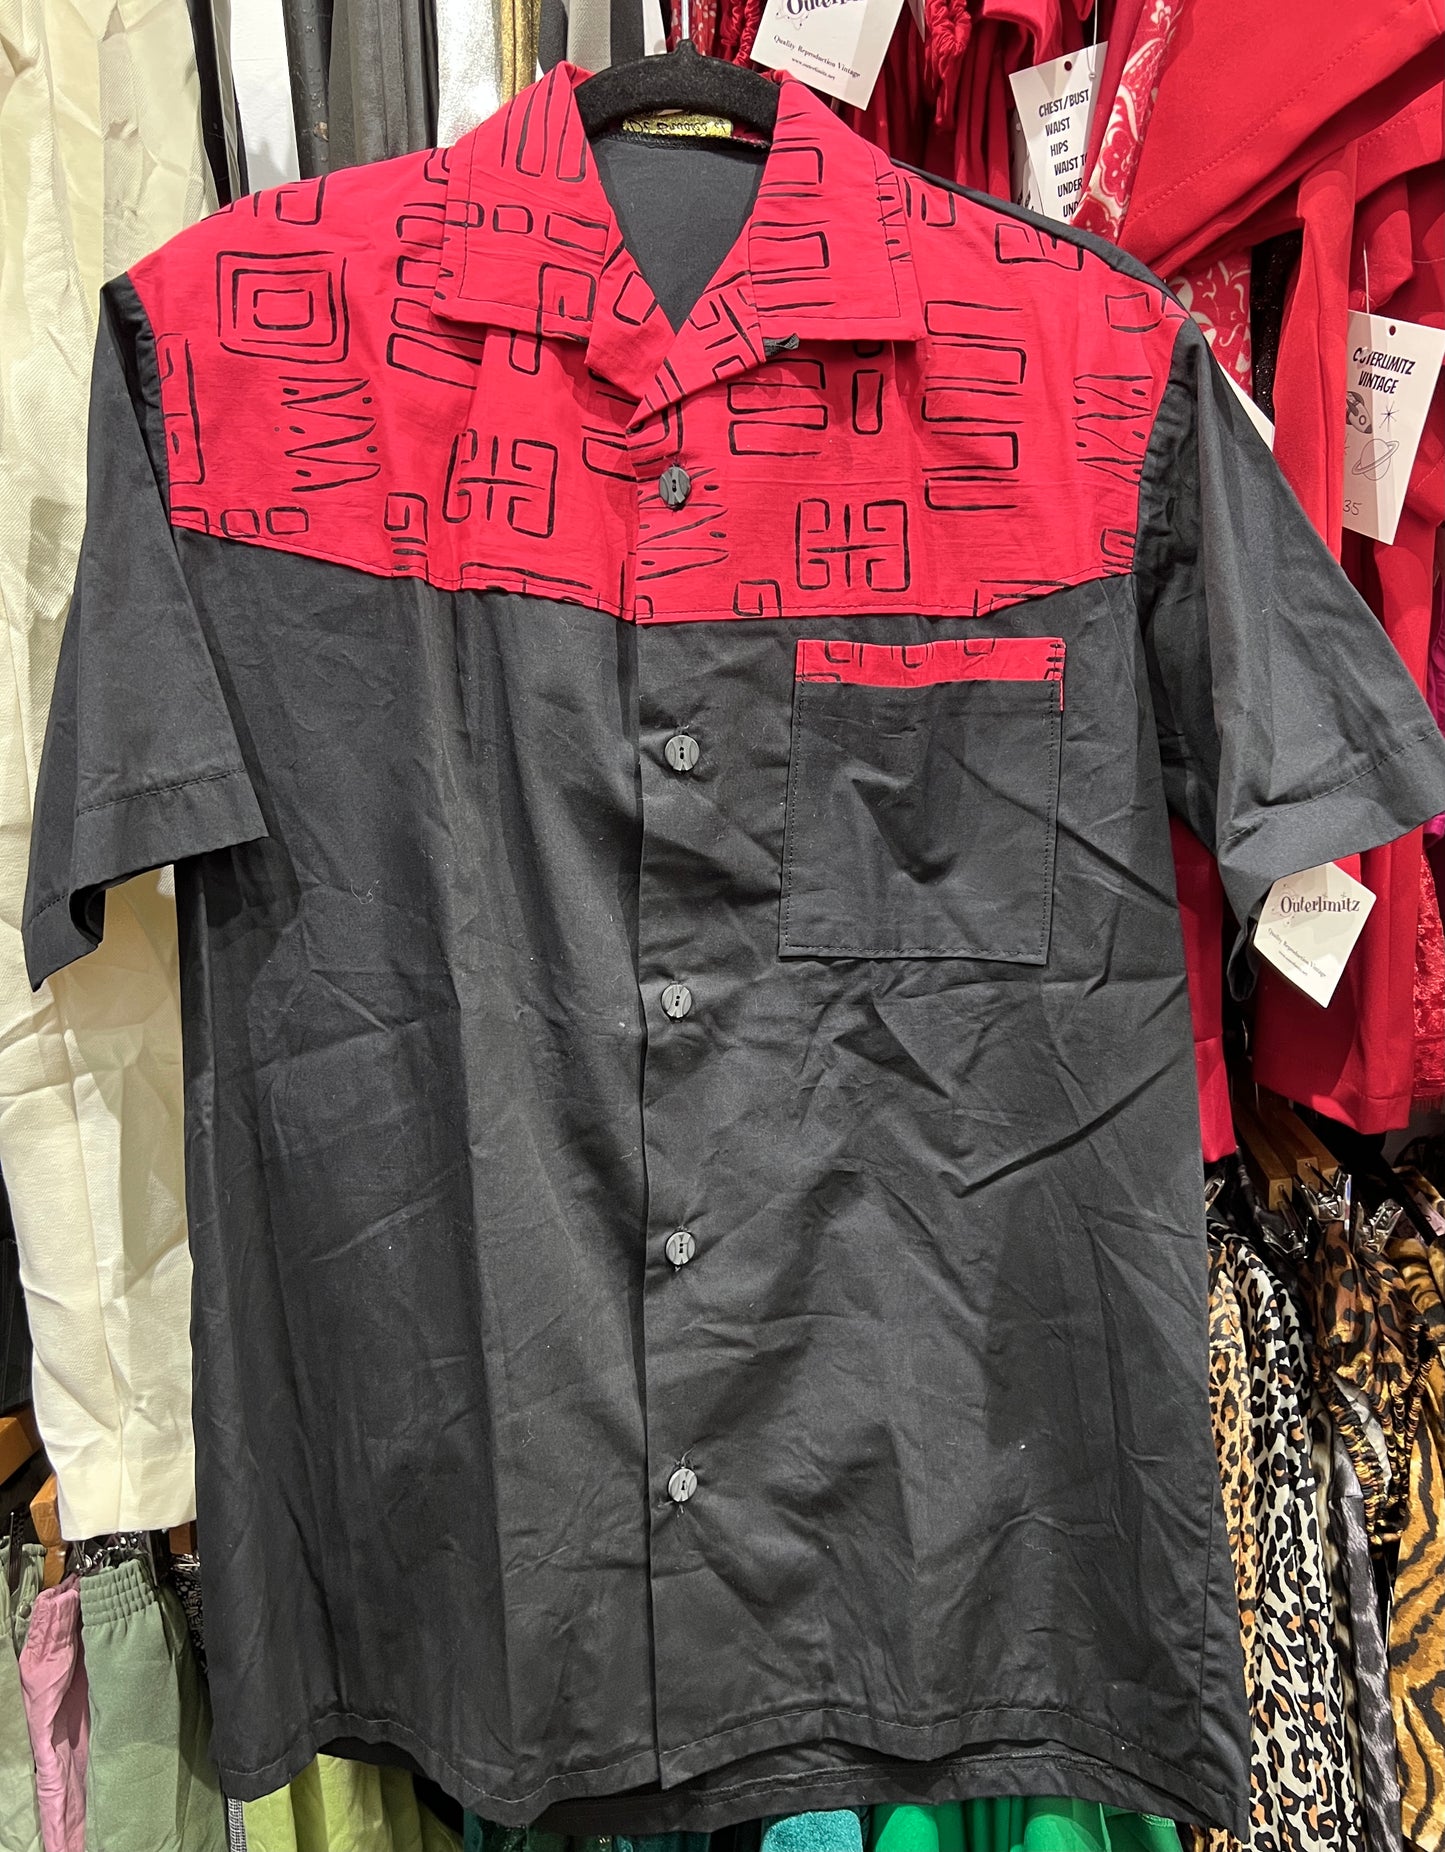 Vintage 1950s short sleeved shirt in black with black flock on red contrast M